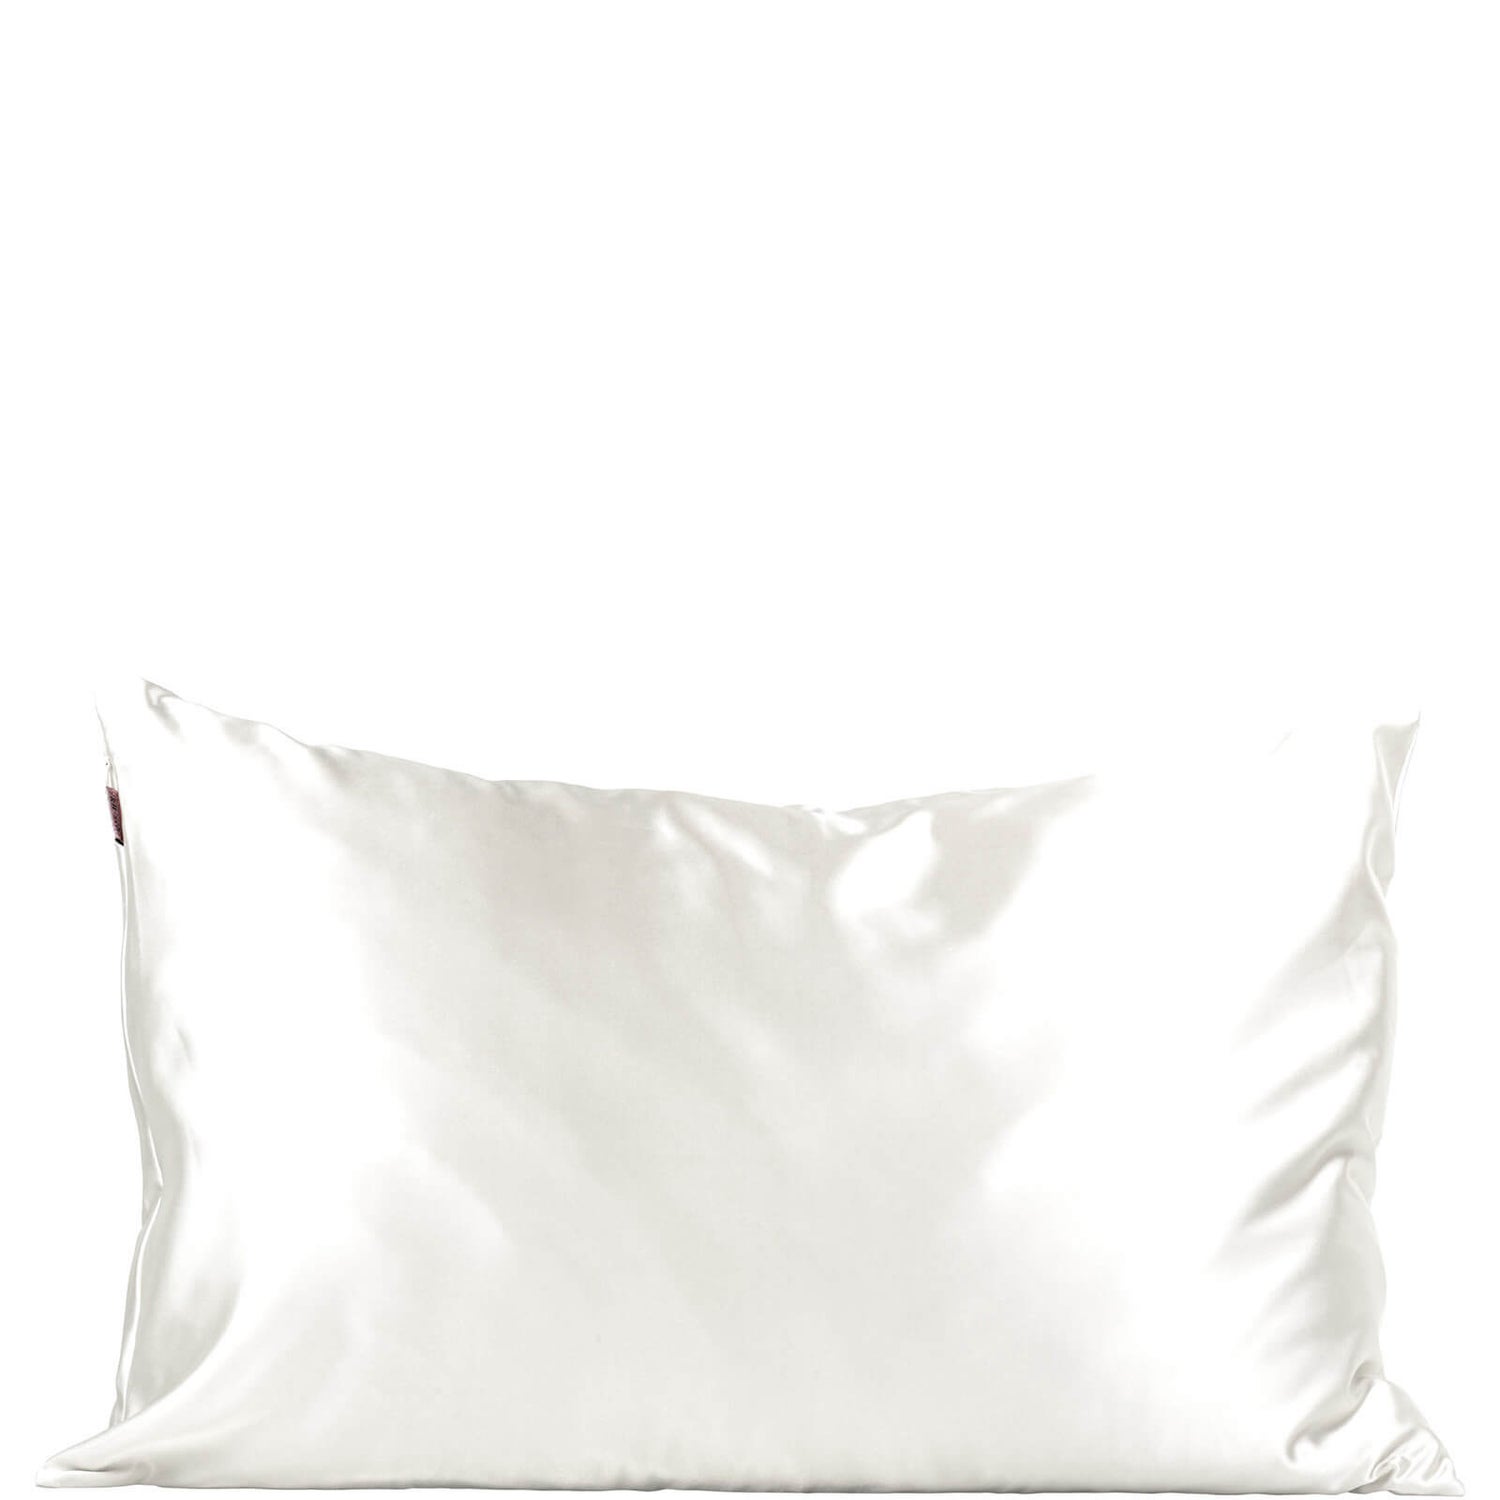 Details about   Kitsch Satin Pillowcase standard size 26"x19" *SILVER 